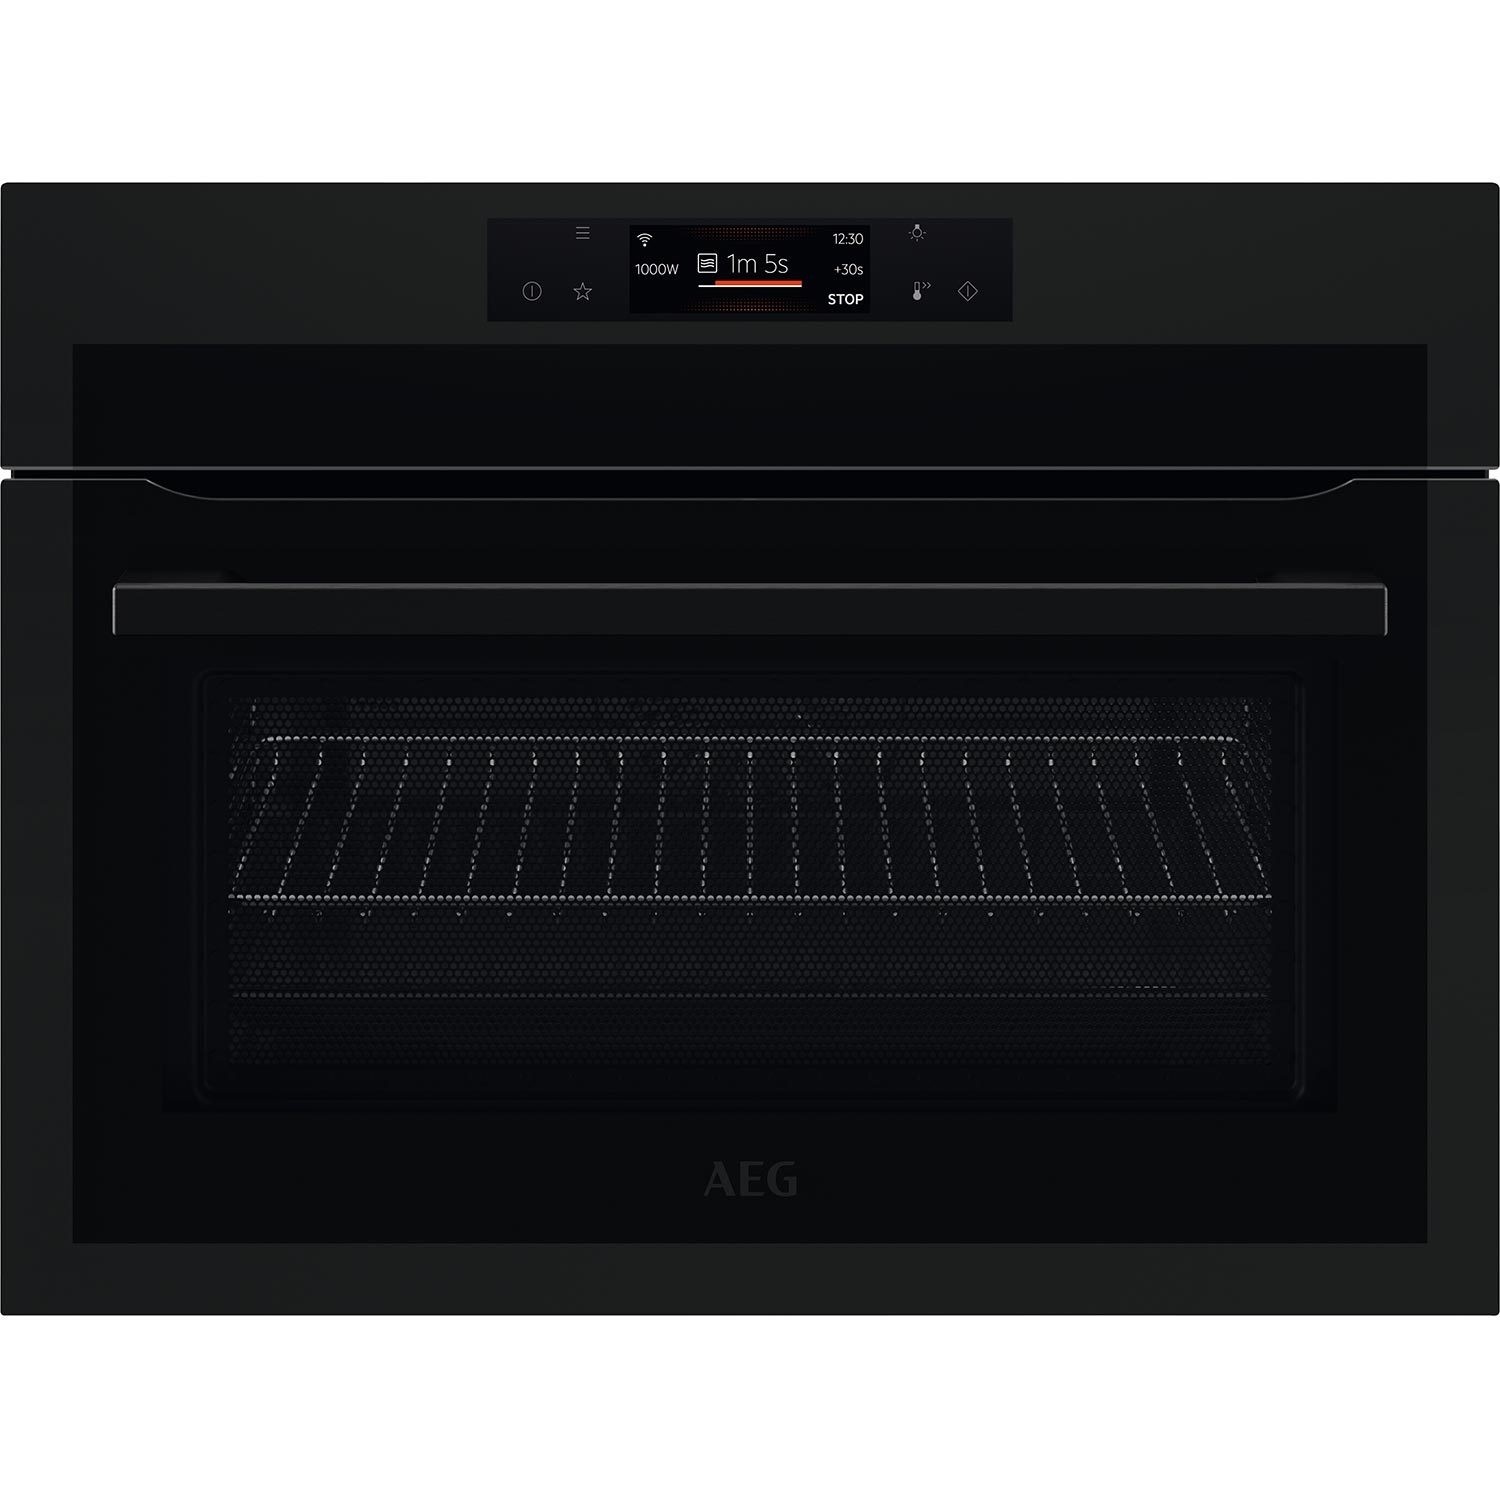 Photos - Oven AEG Built In Combination Microwave  - Matte Black KME768080T 